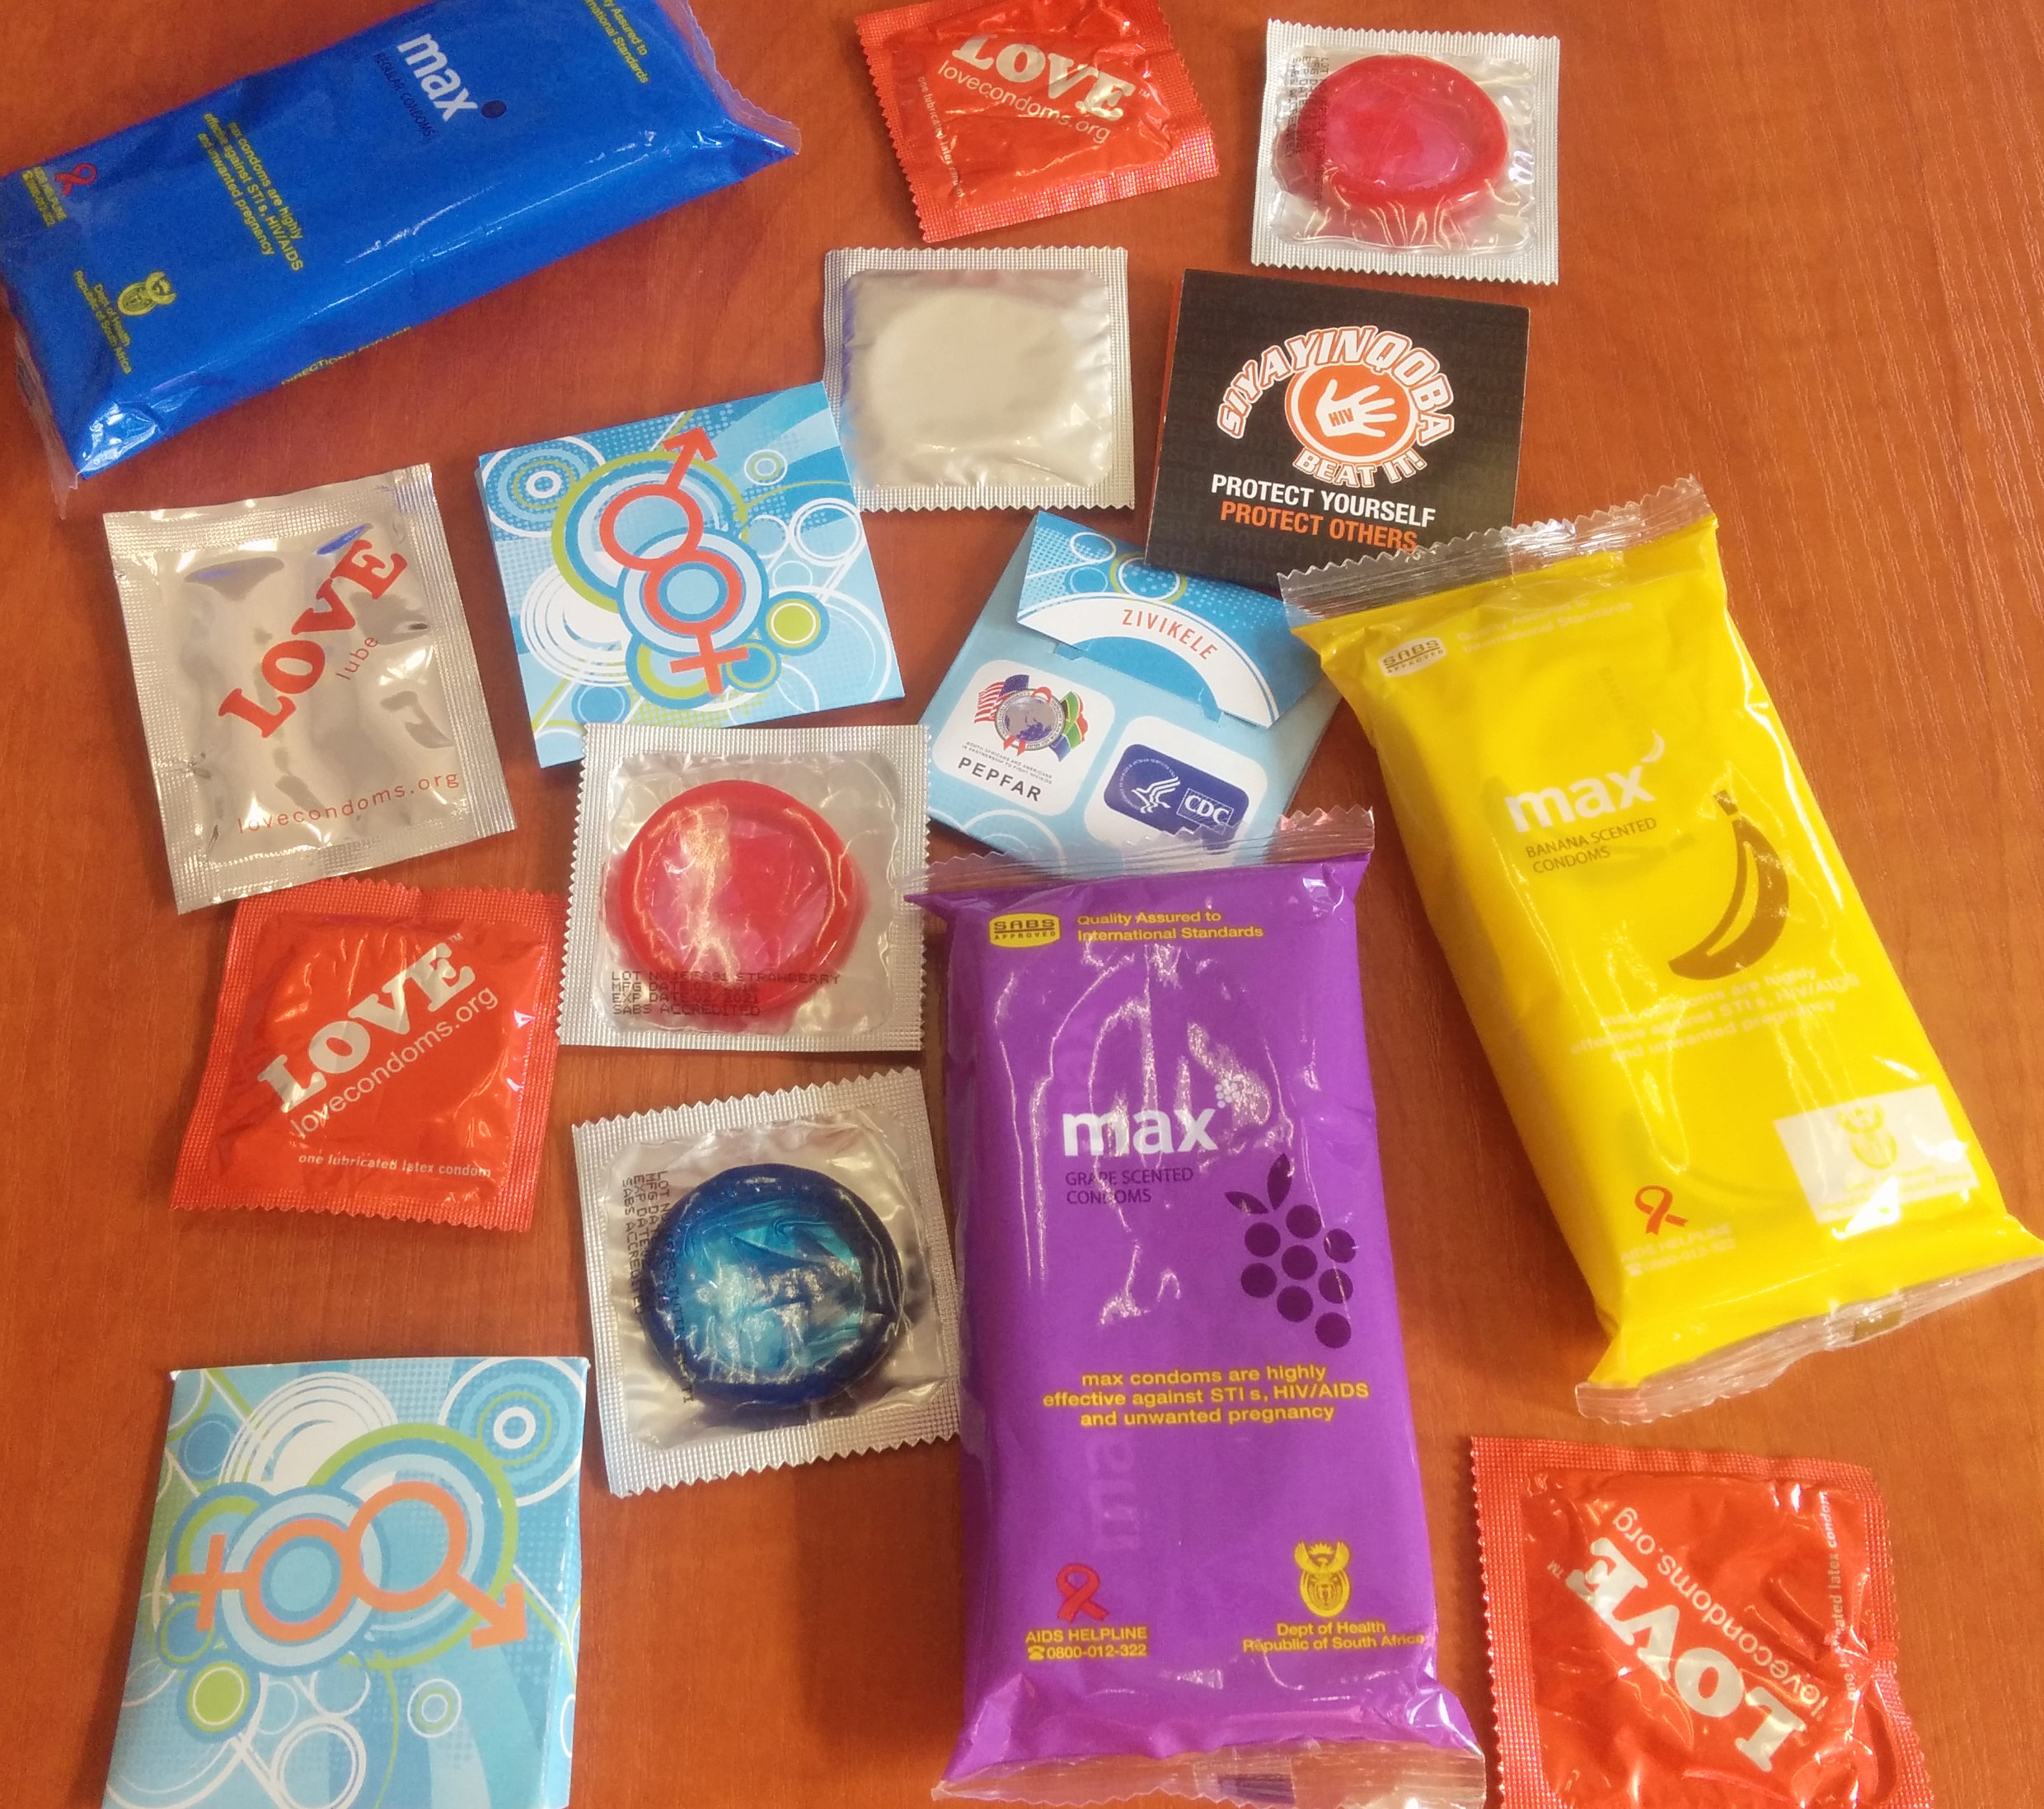 Distribution of Condoms in Schools